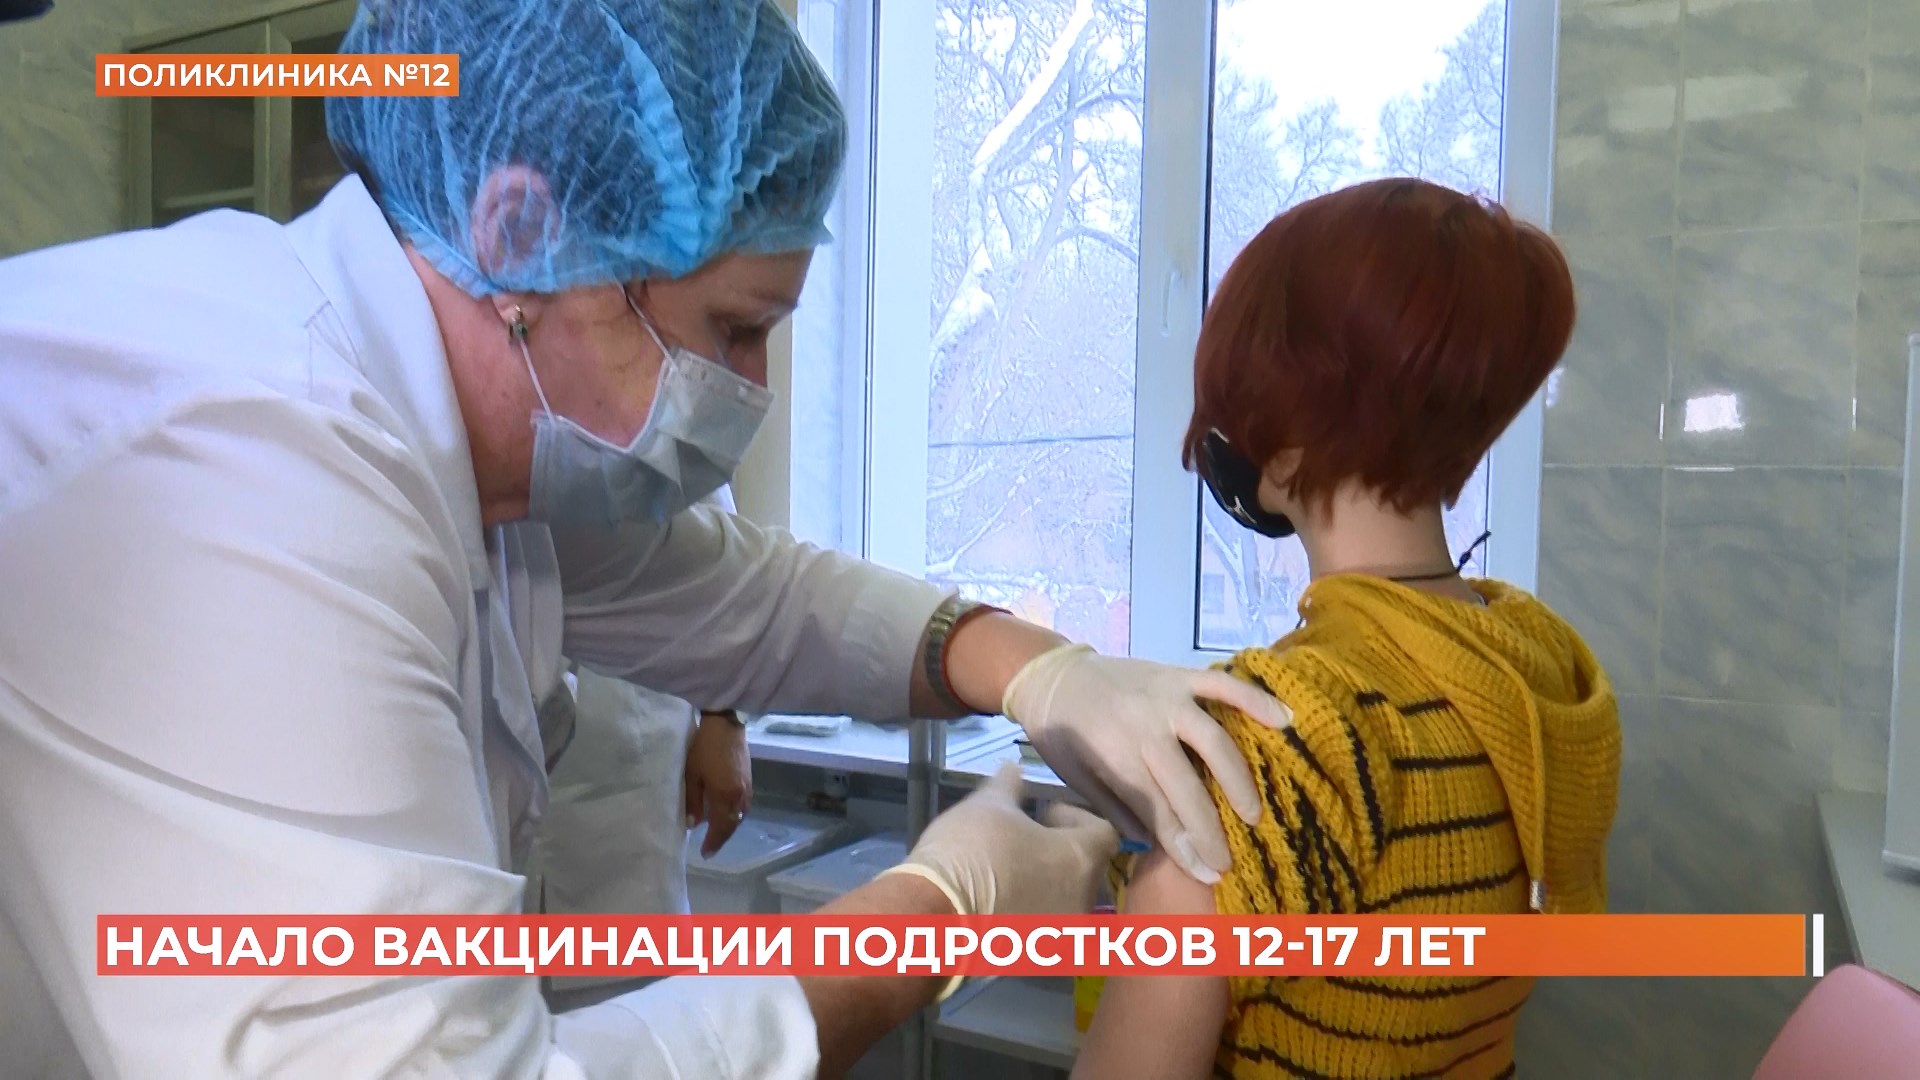 Вакцинация подростков от коронавируса началась в Ростове